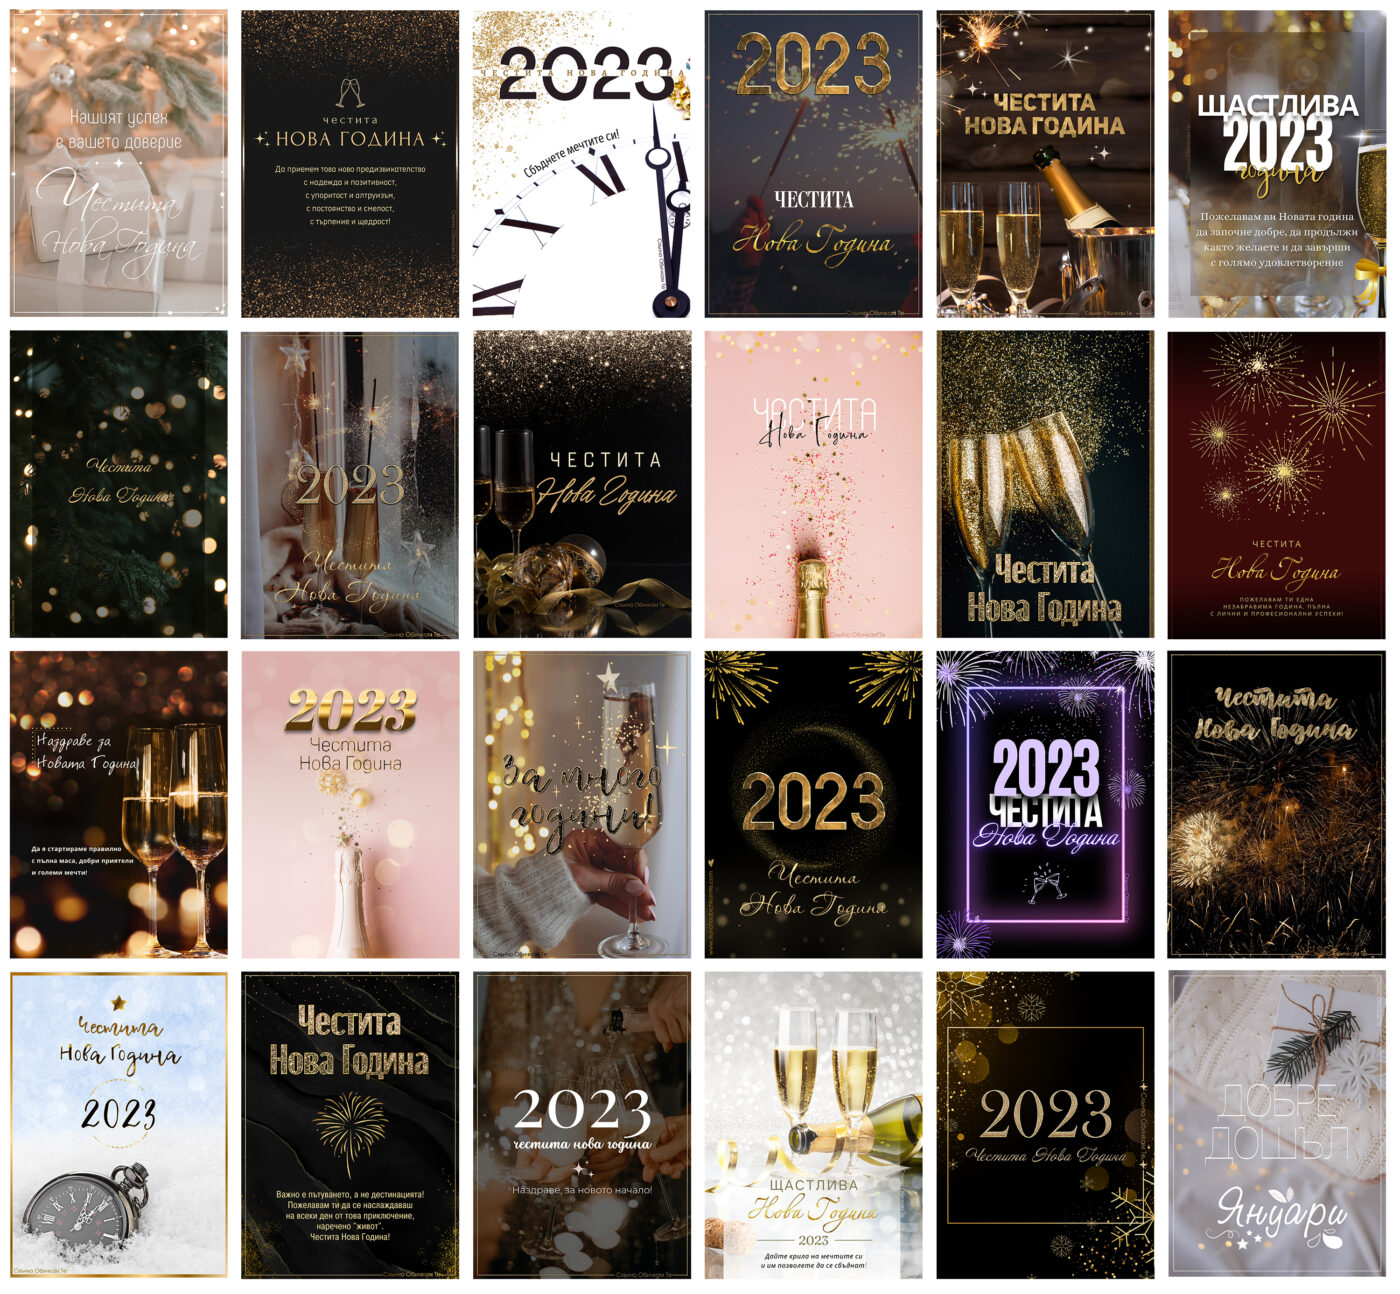 Новогодишни картички 2023 - Картички за Нова година 2023, честита нова година 2023, за много години, пожелания за нова година, картинки за нова година, новогодишни картички, поздравления за нова година, слънчо обичкам те